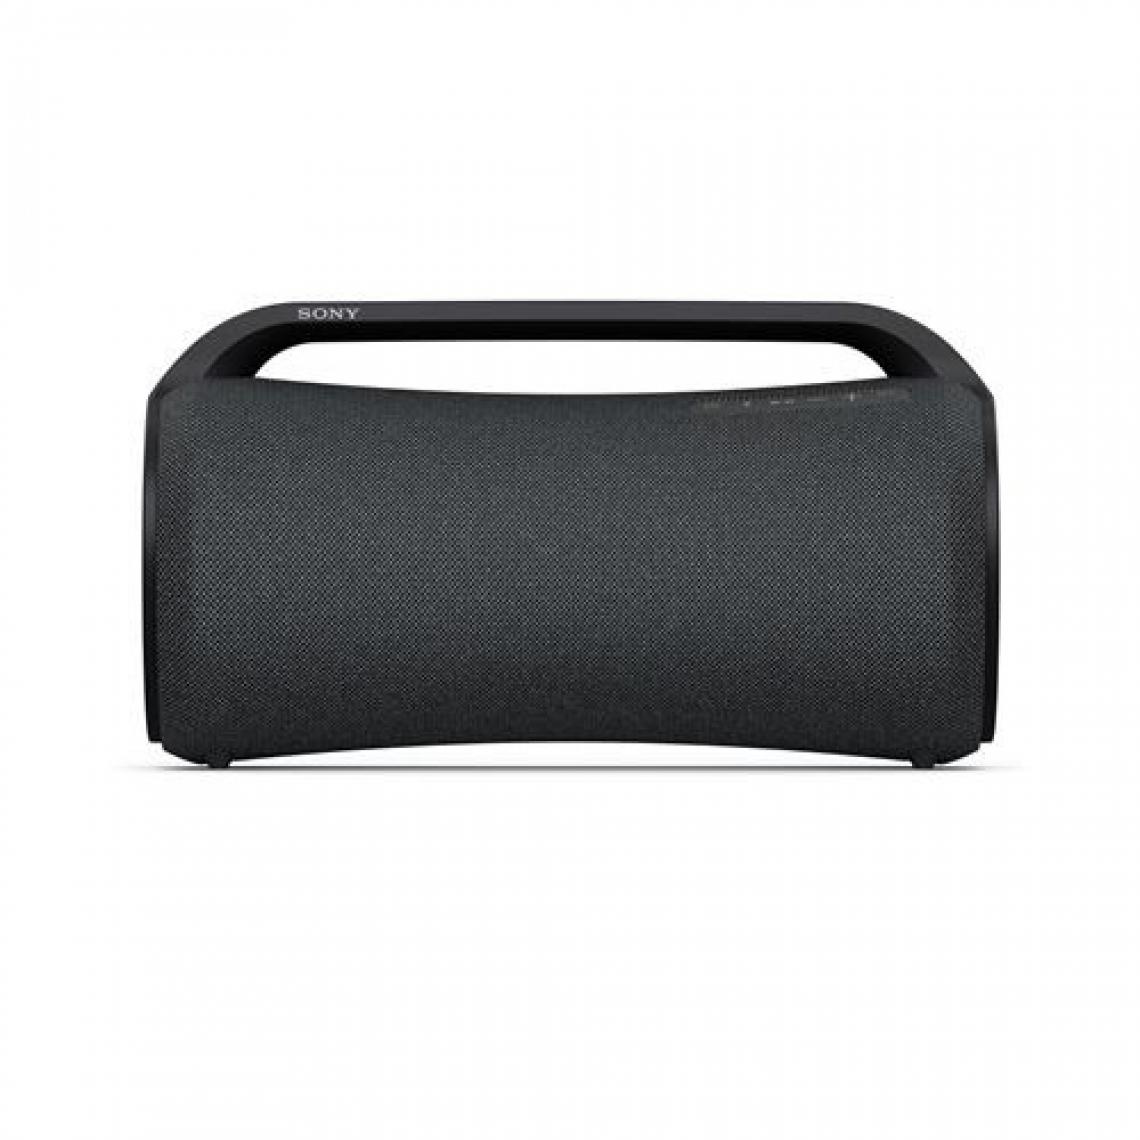 Sony - Enceinte portable sans fil Bluetooth Sony SRS XG500 Noir - Enceintes Hifi